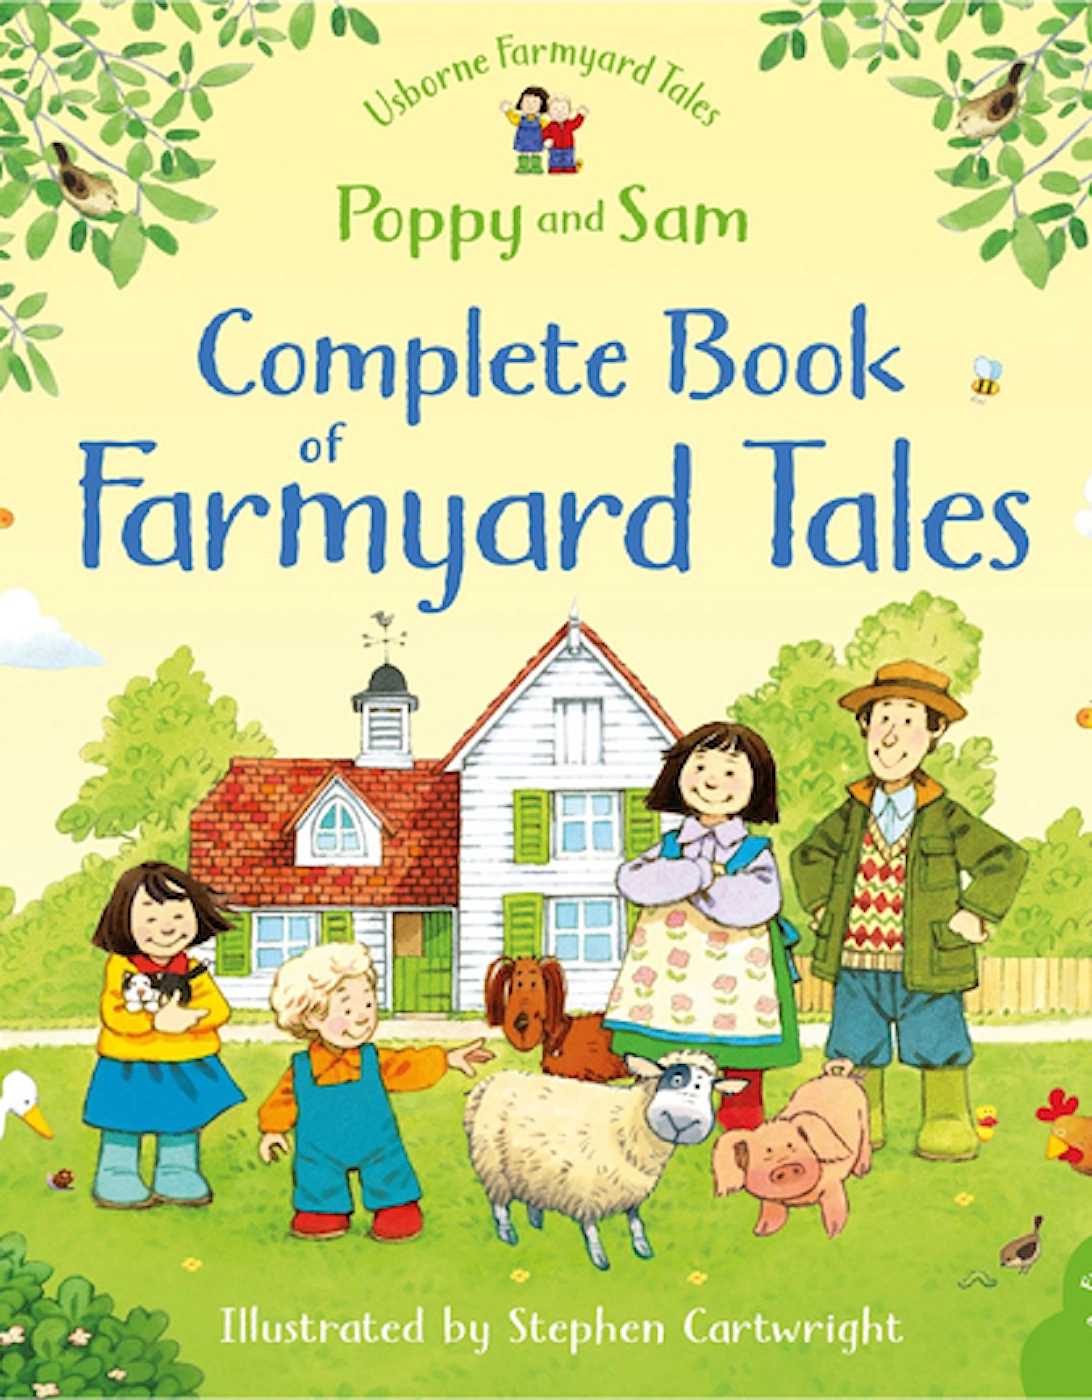 Farmyard Tales: Complete Book of Farmyard Tales, 2 of 1